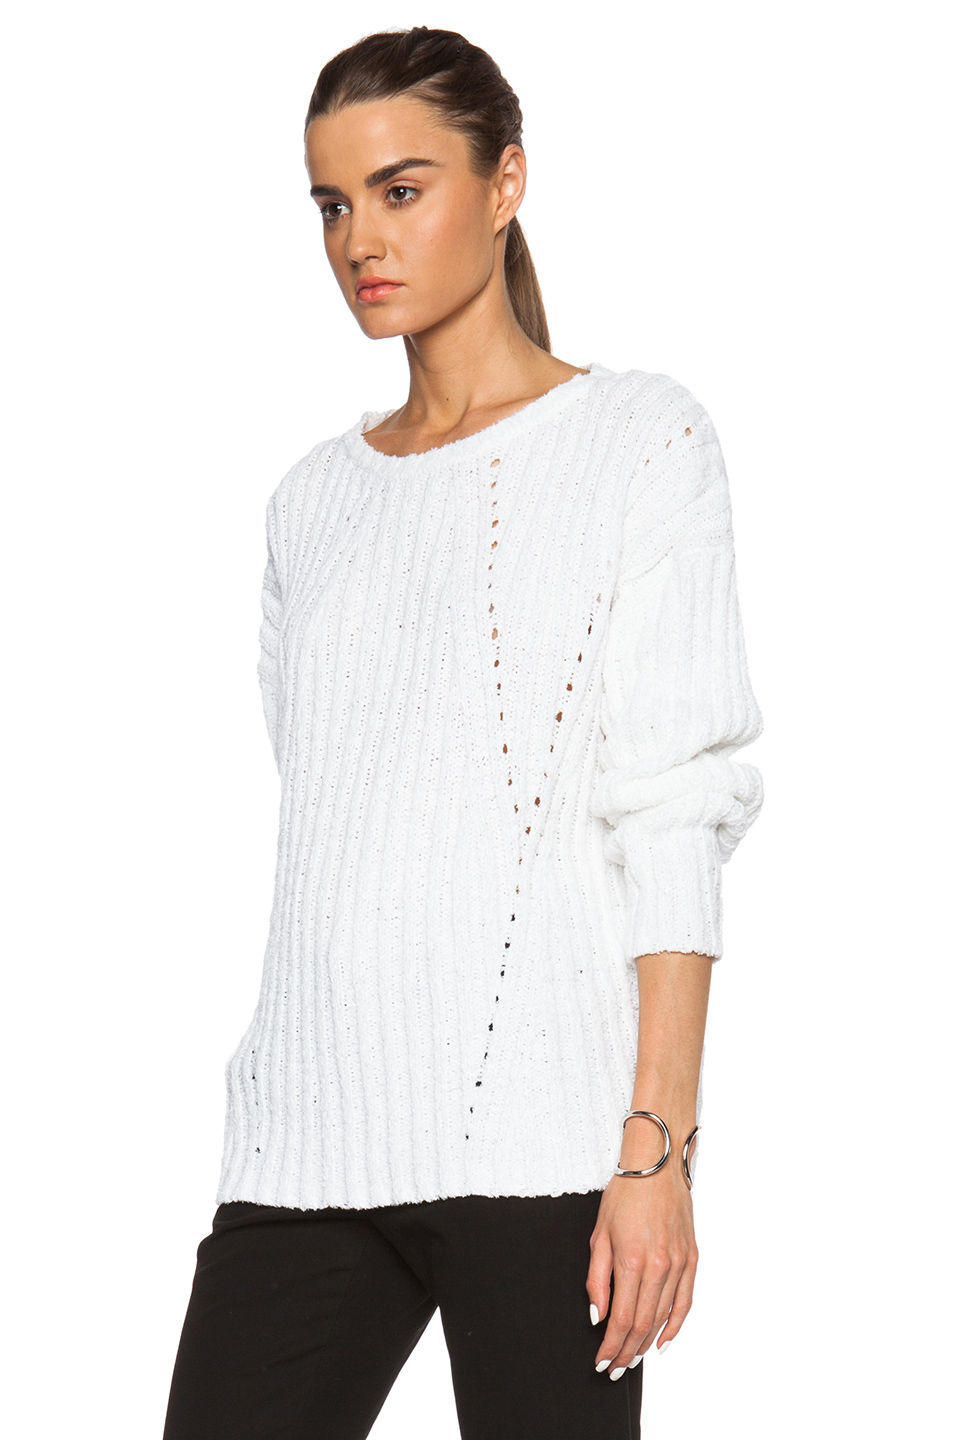 Lyst - Nili Lotan Multi Direction Rib Sweater in White